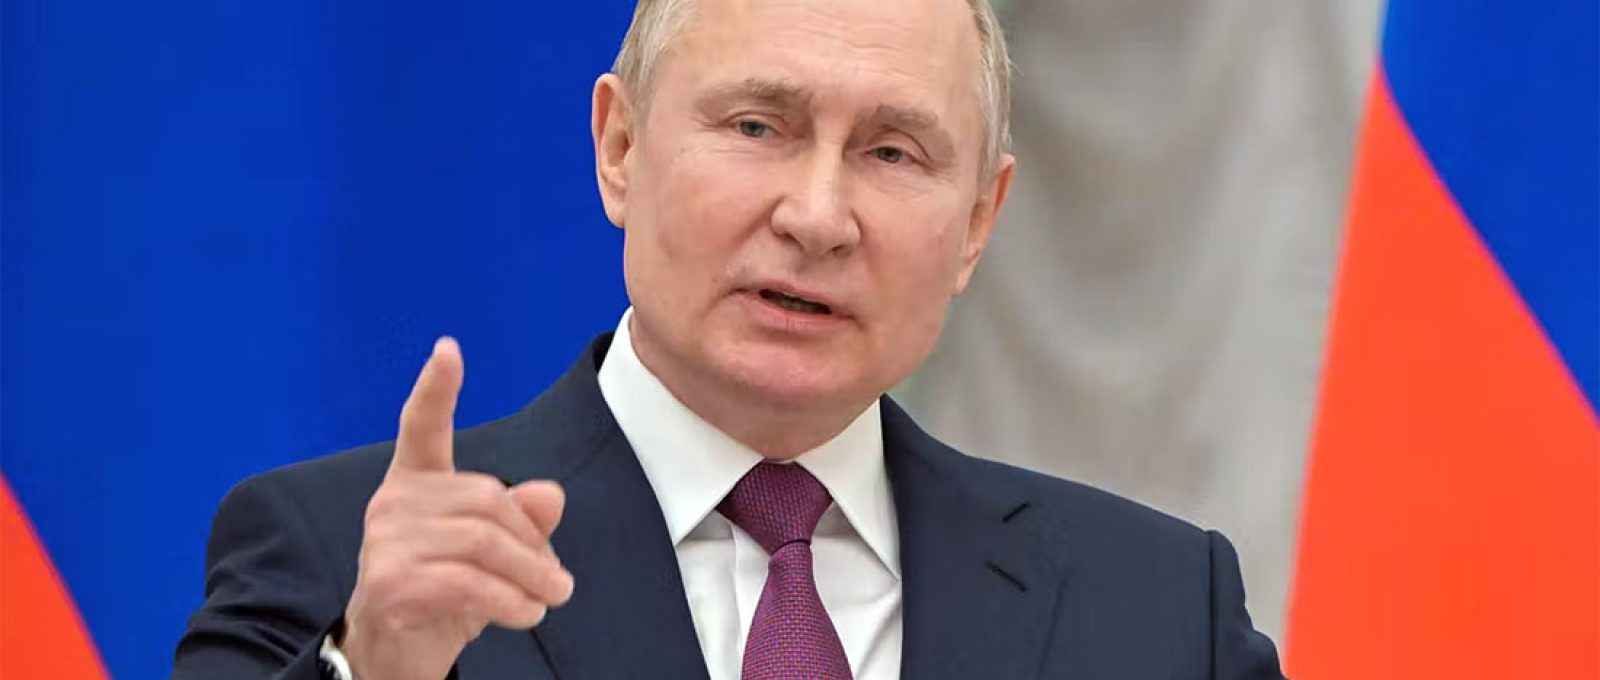 O presidente da Rússia, Vladimir Putin (Mikhail Klimentyev/Sputnik/AFP).